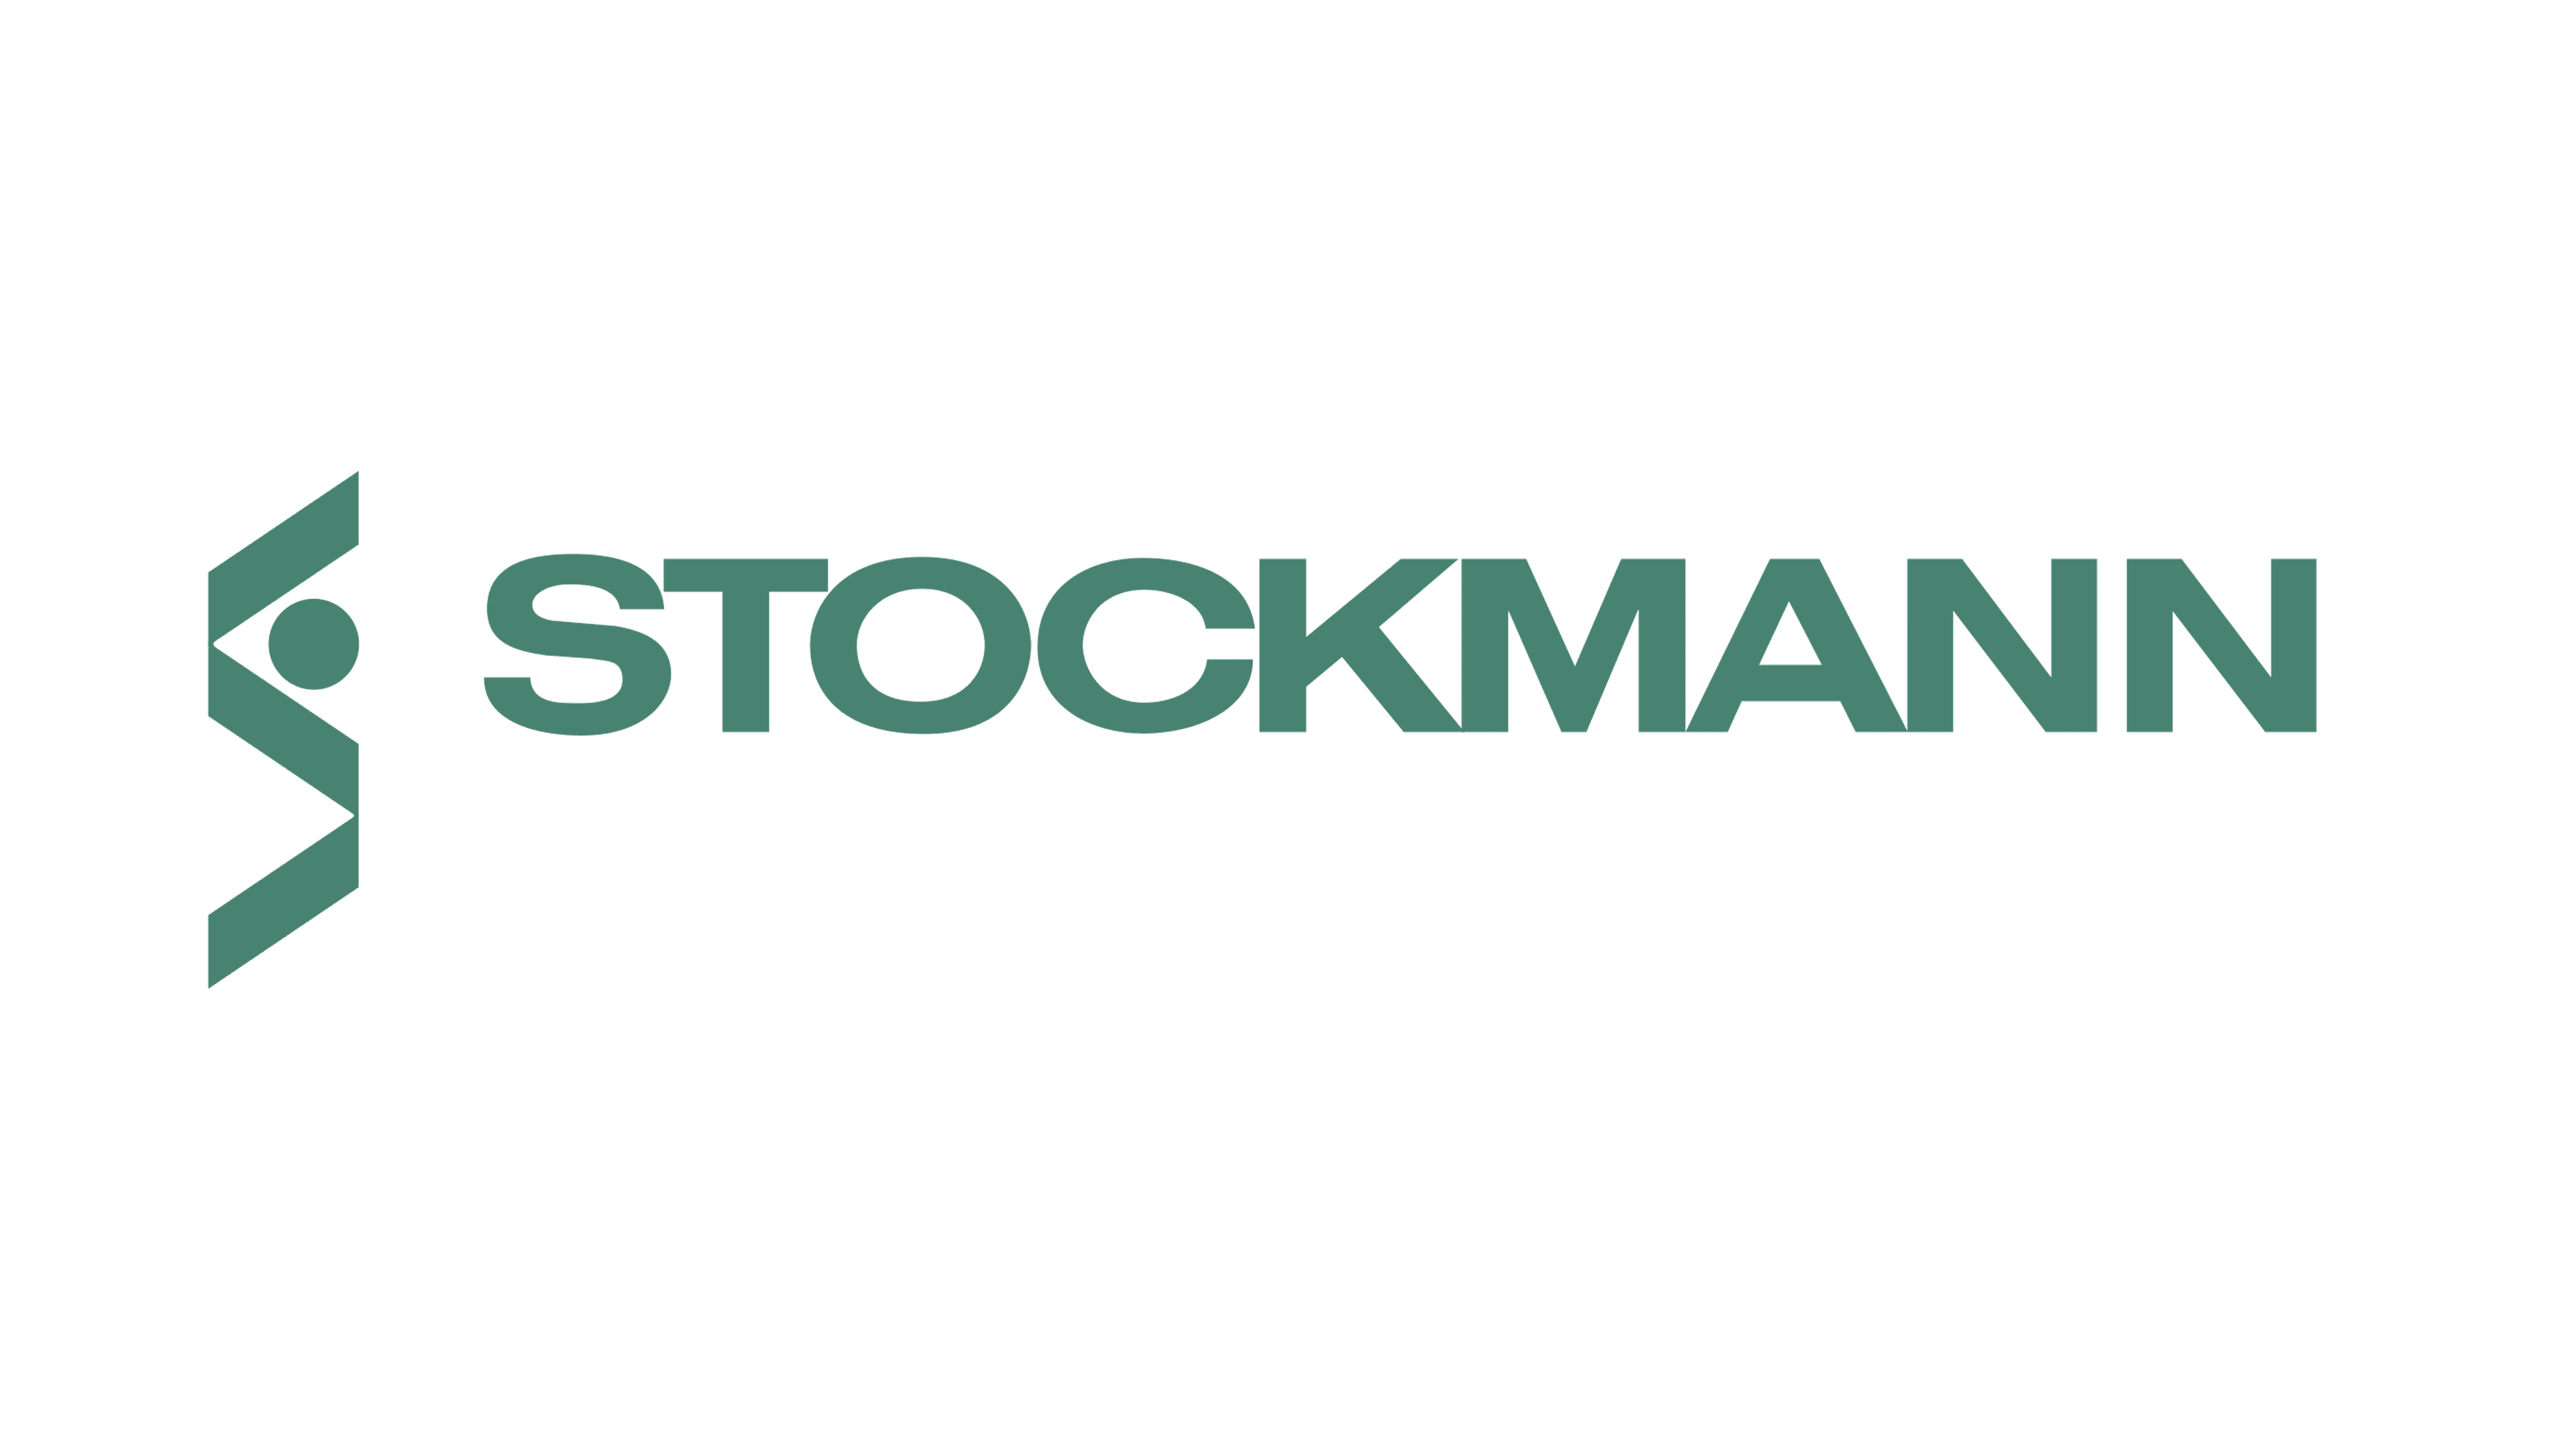 Erply Stockmann Integration blog post cover image